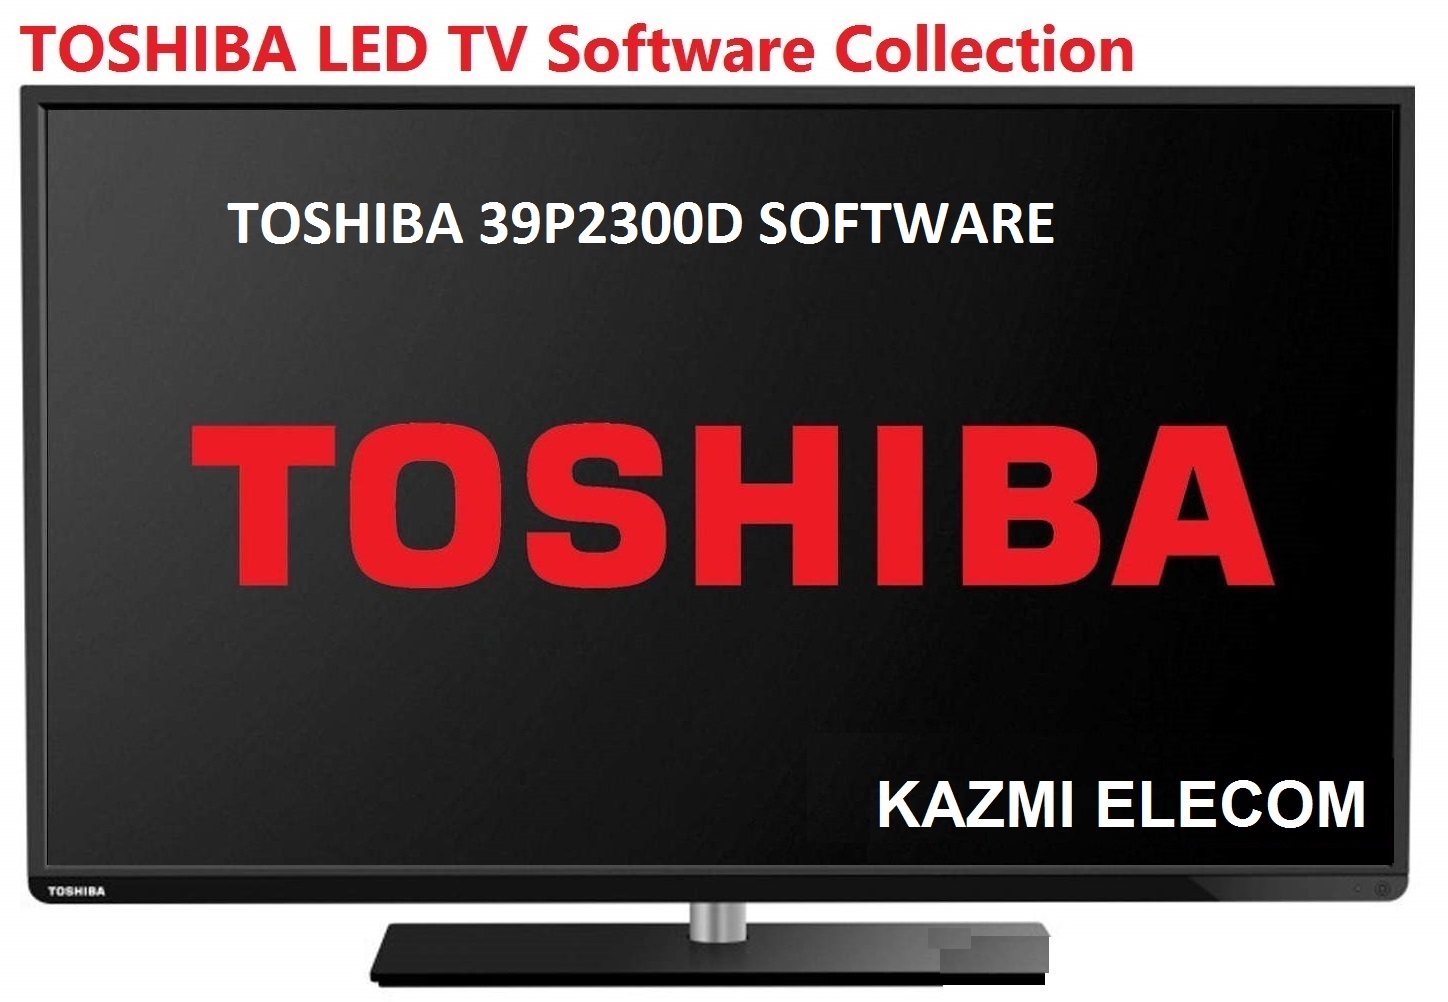 Toshiba 39P2300D